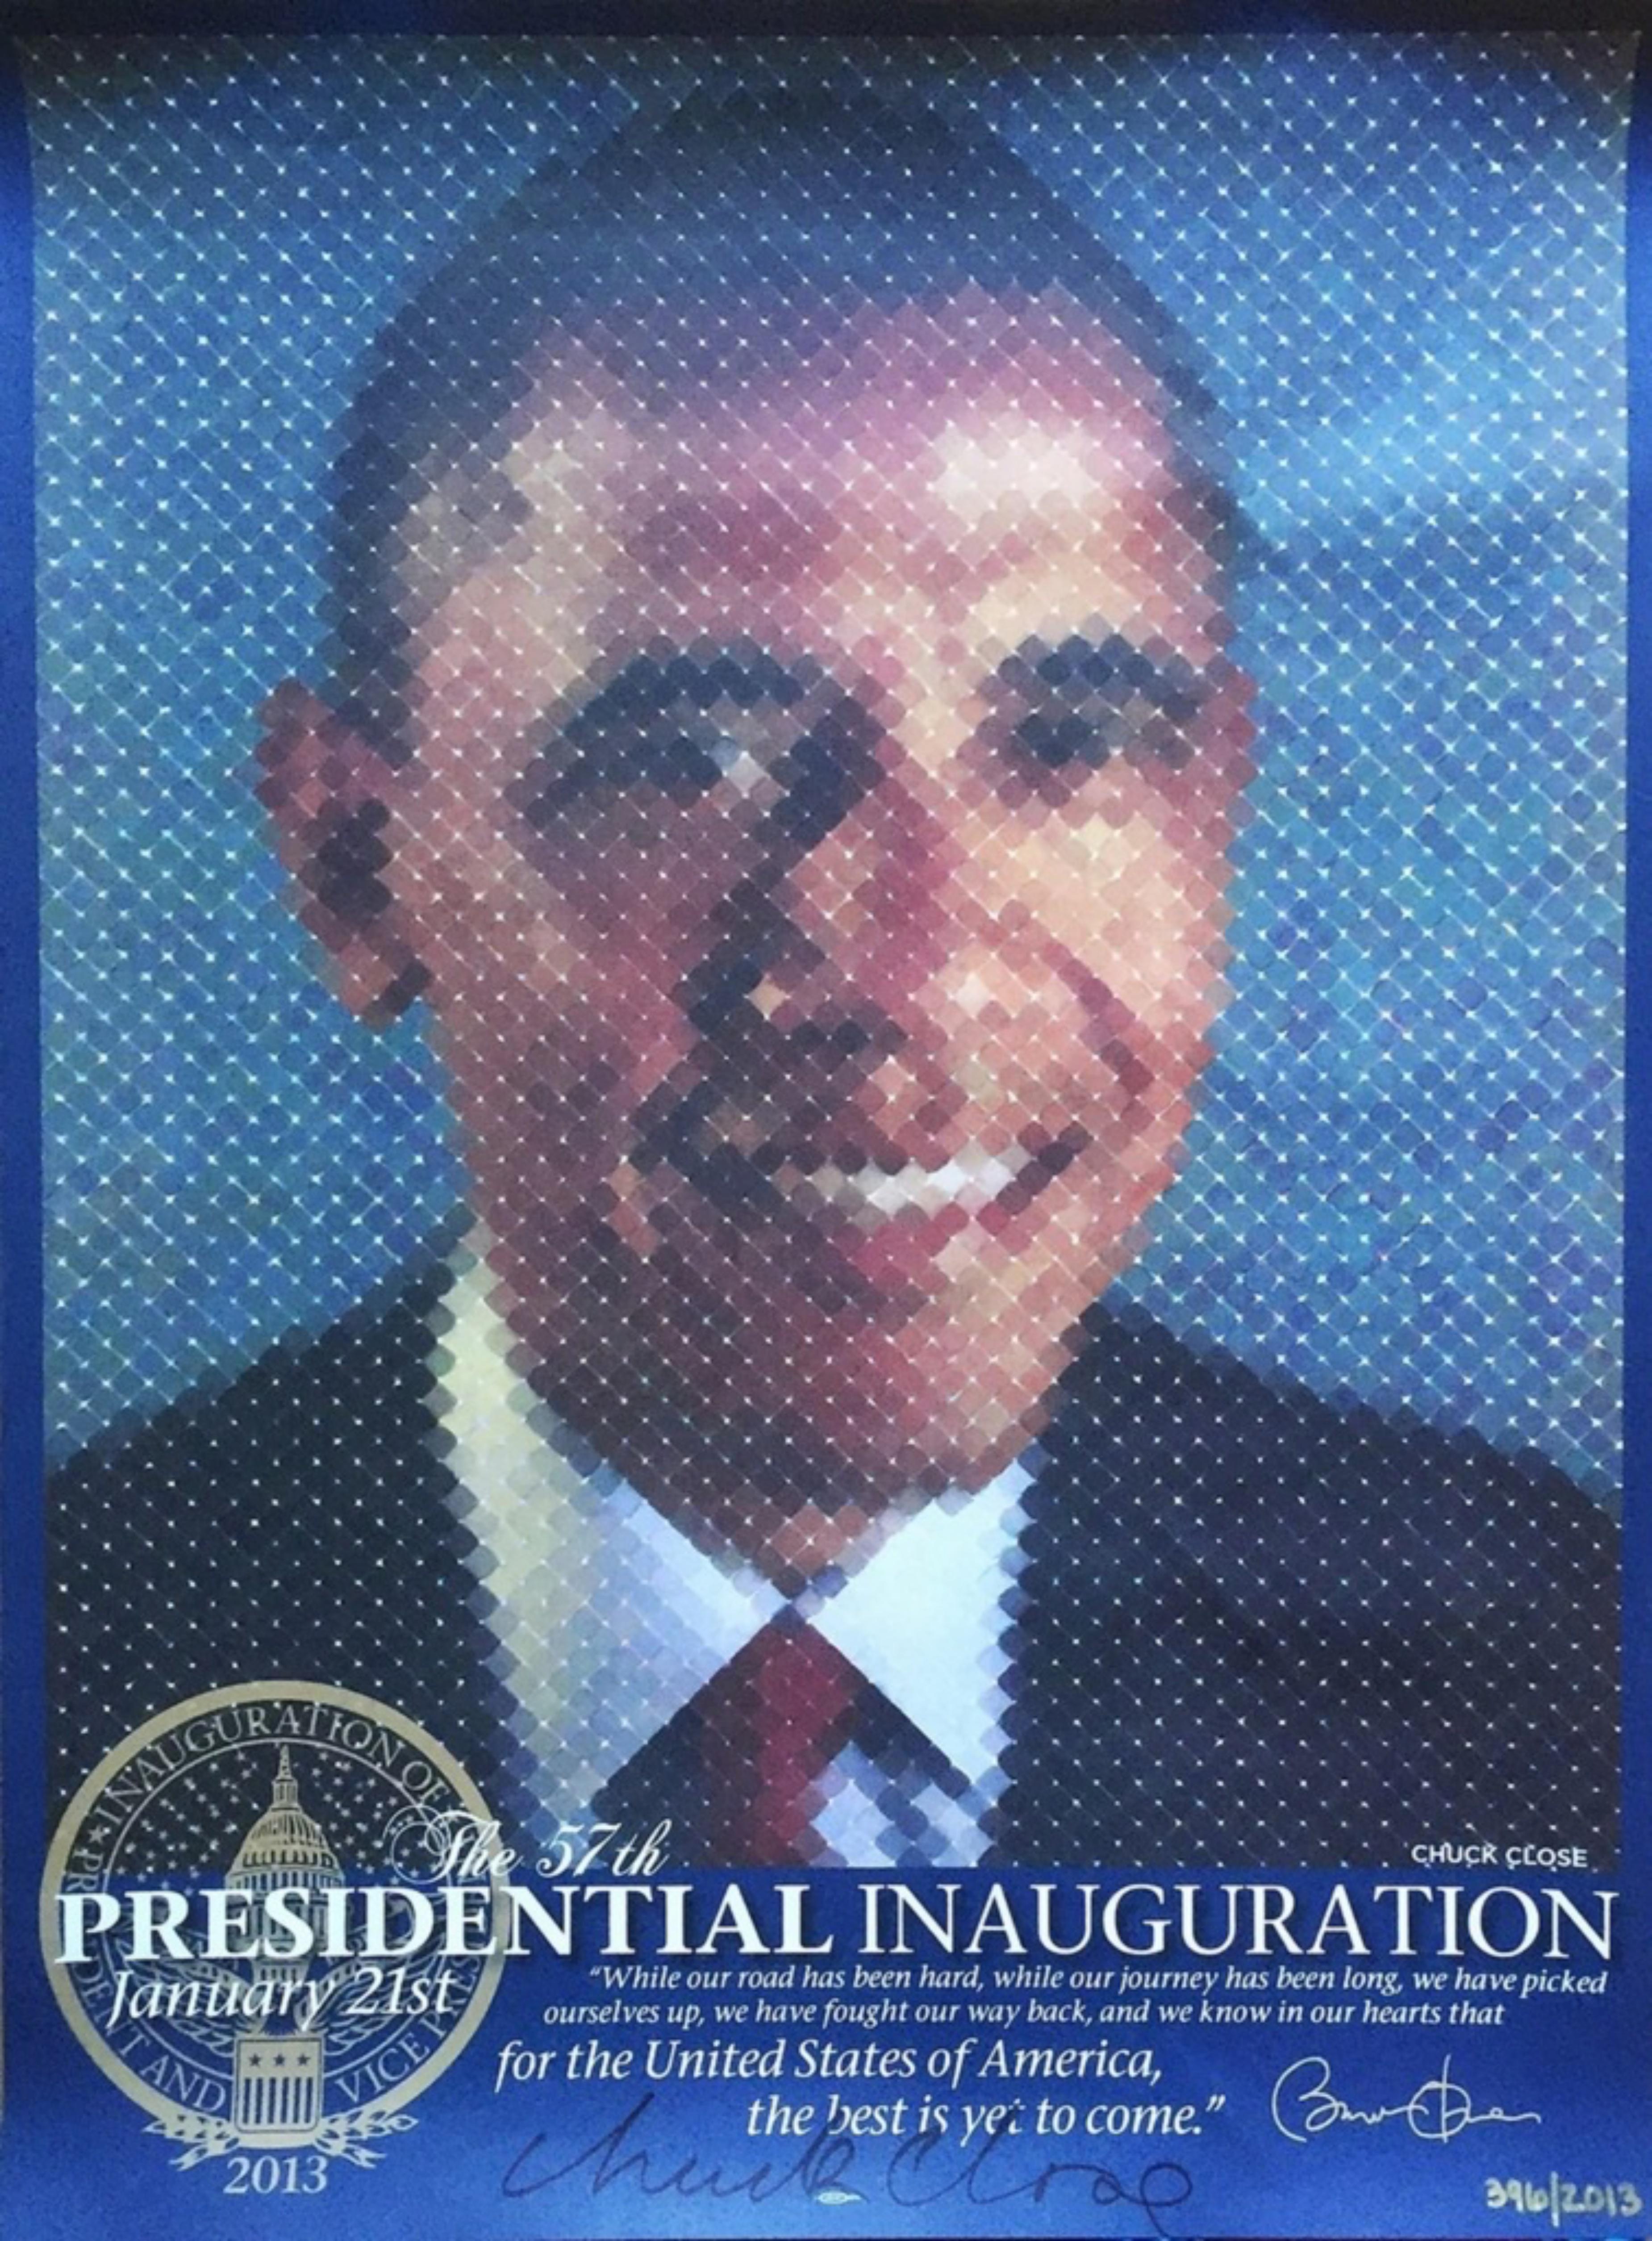 La Inauguración Presidencial de Obama (firmado únicamente a mano por Chuck Close) 